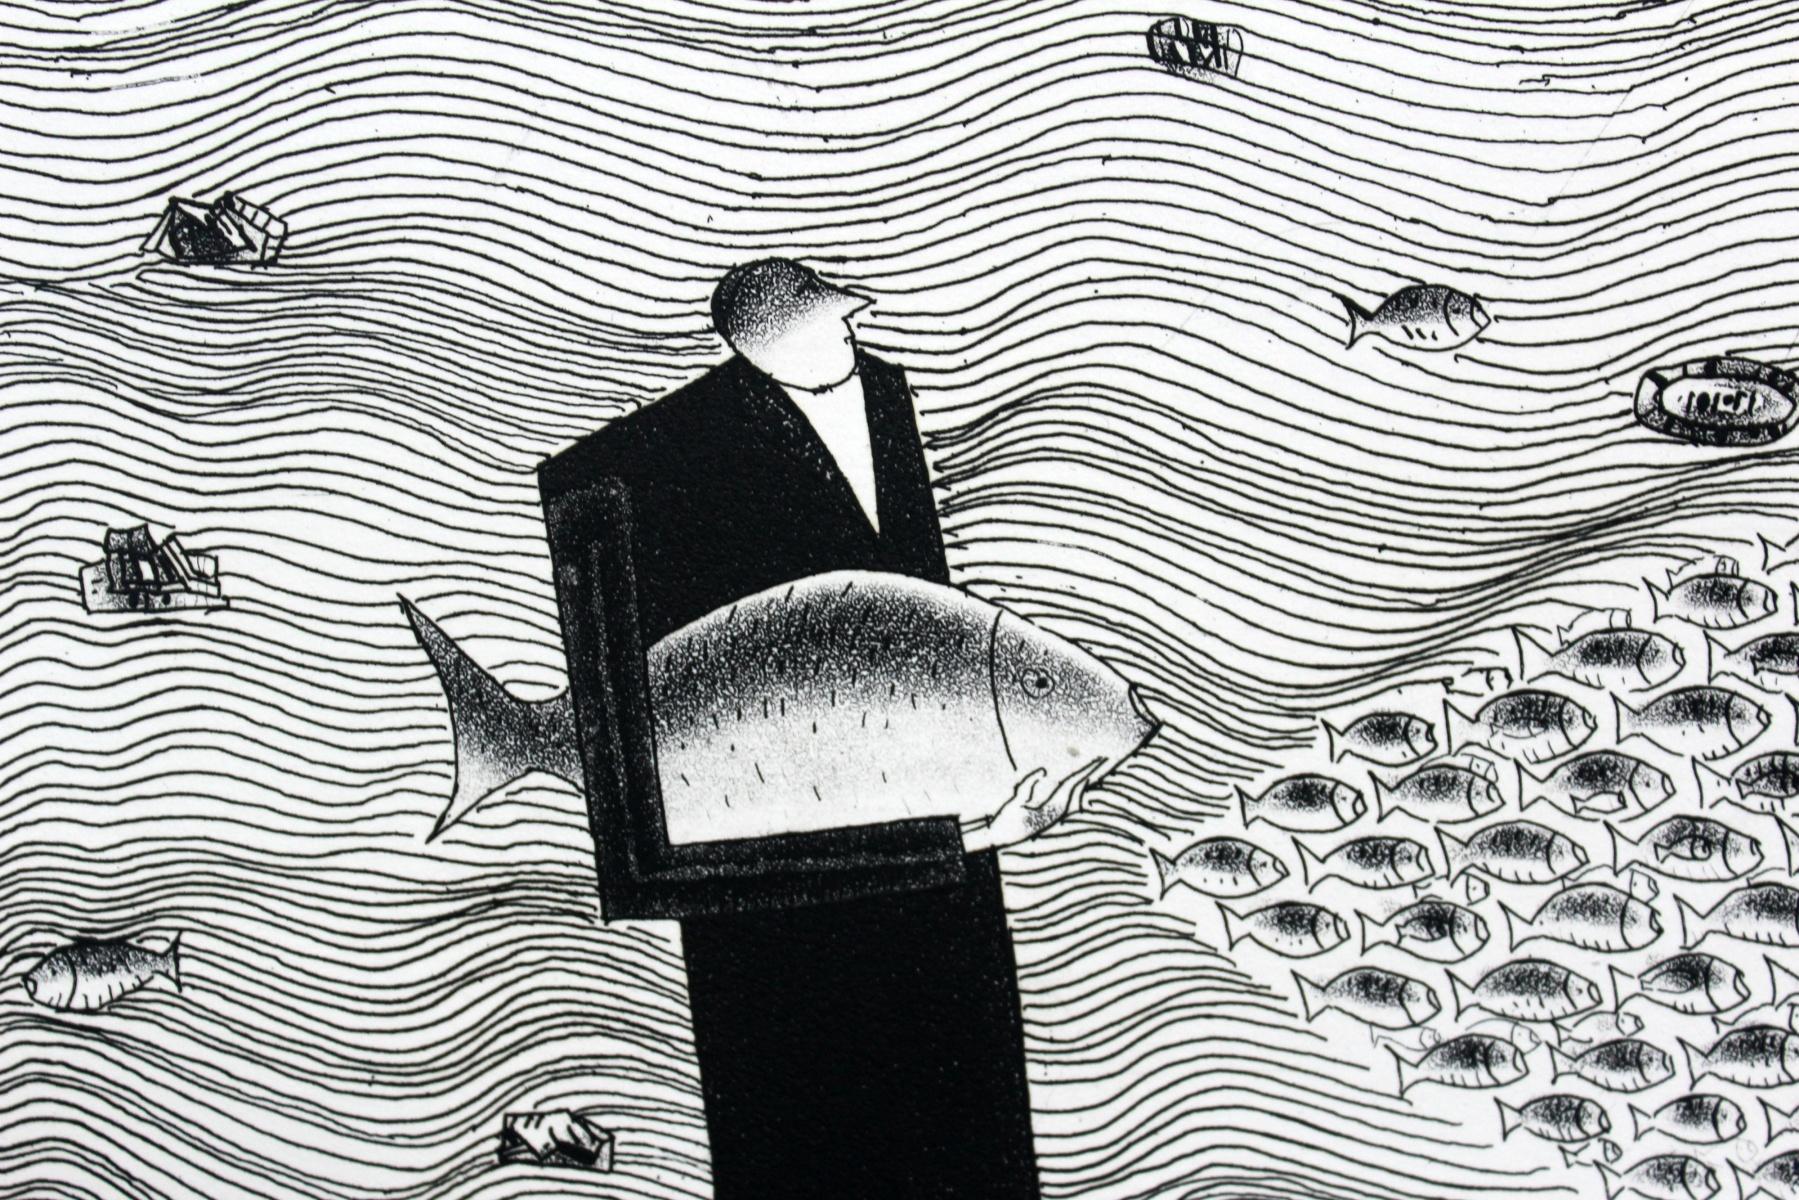 Fisherman's workplace - XXI century, Black and white figurative print - Painting by Jerzy Dmitruk